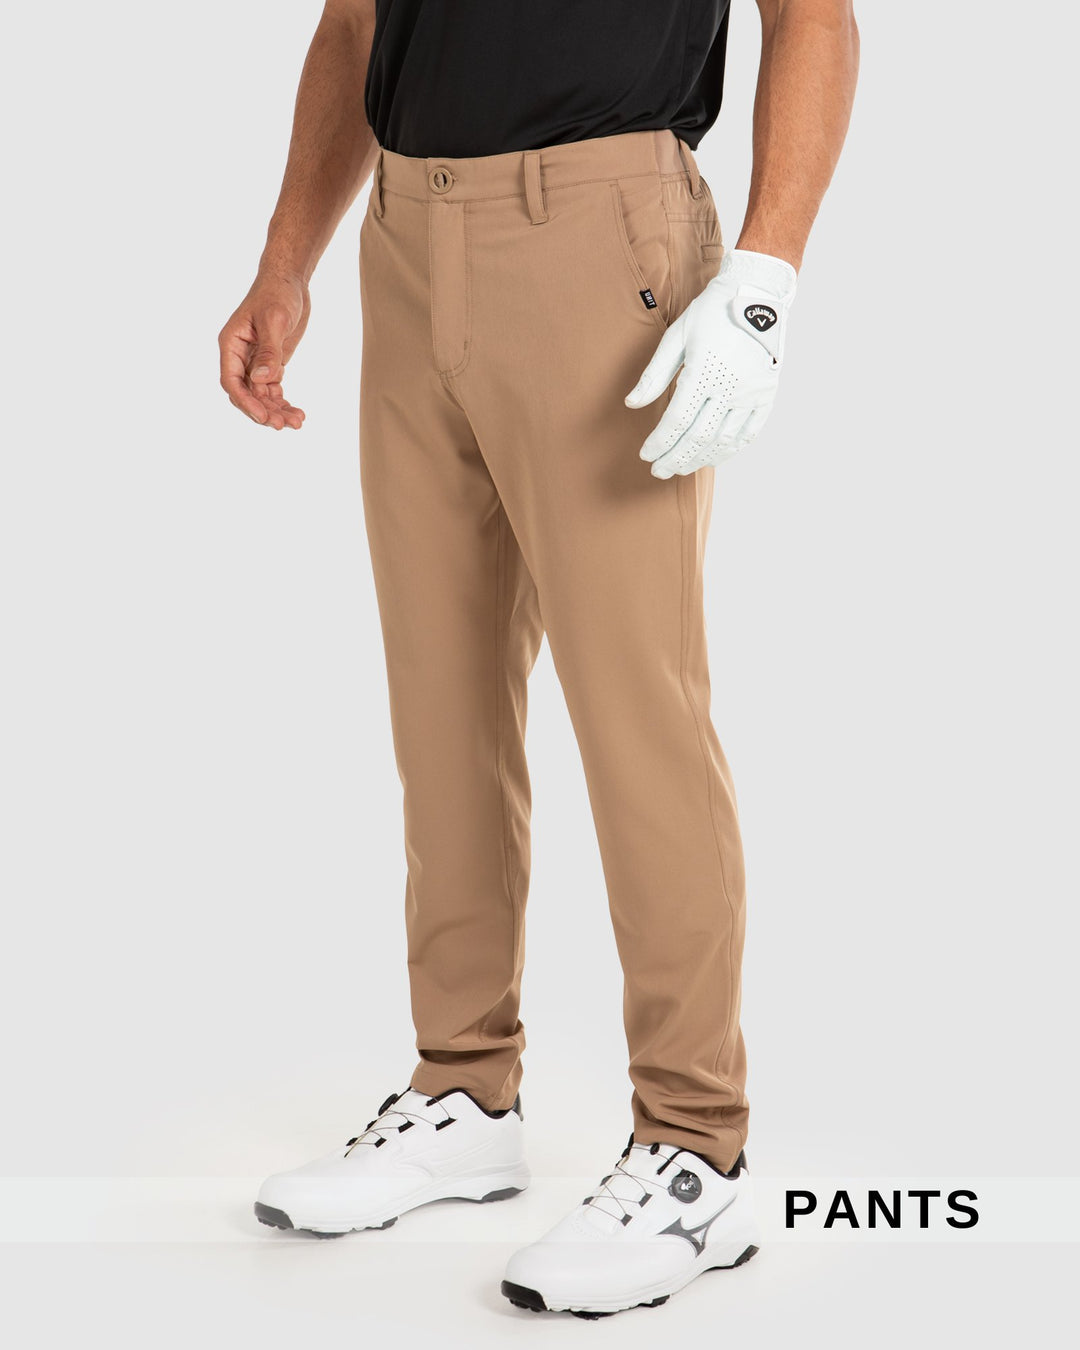 Mens Golf Pants Bundle